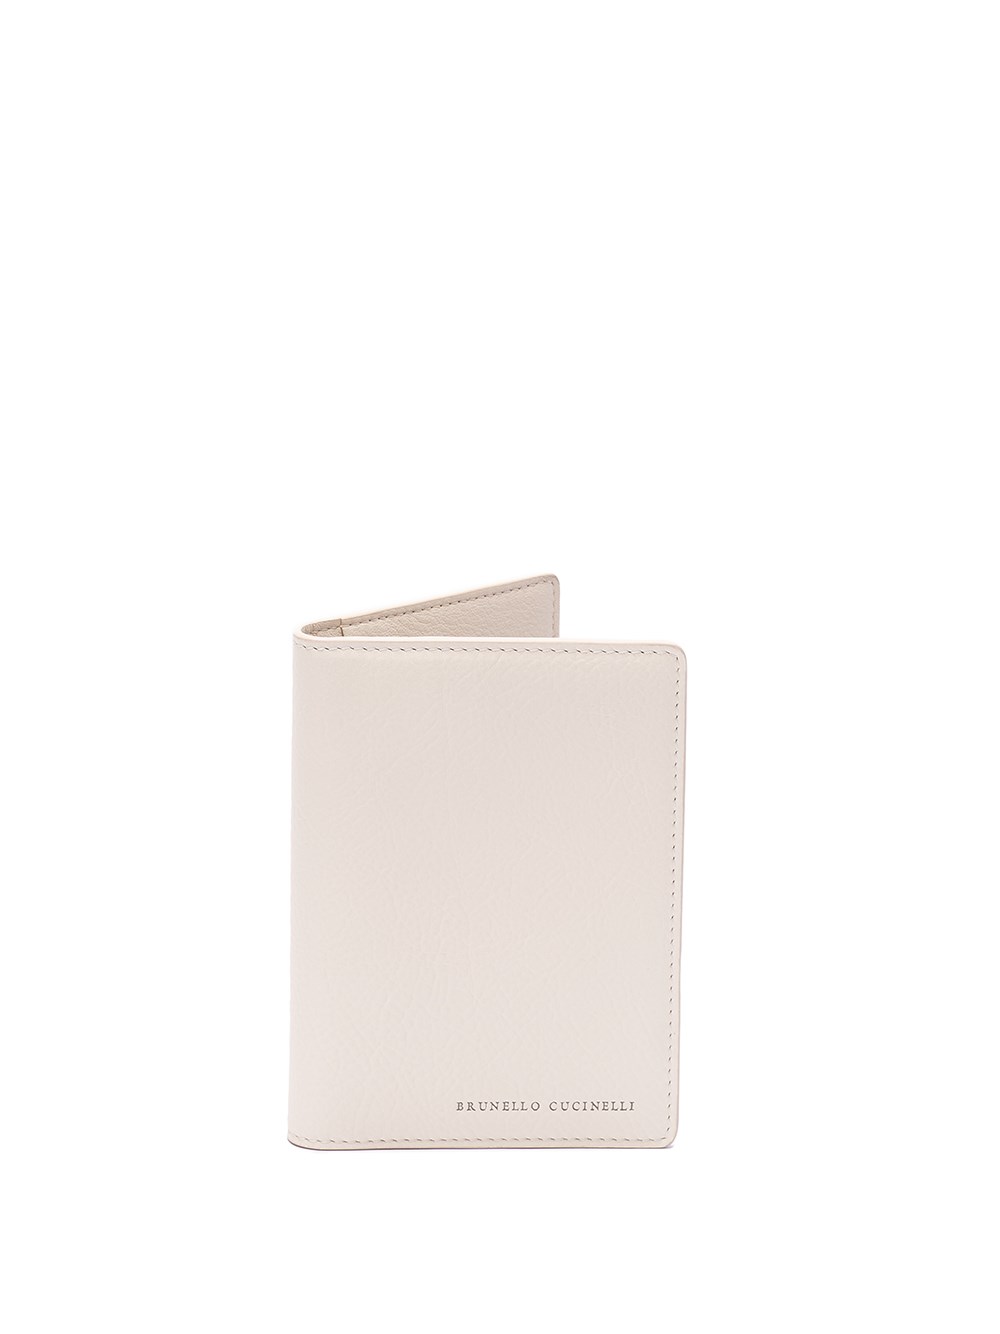 Brunello Cucinelli Passport Case In White